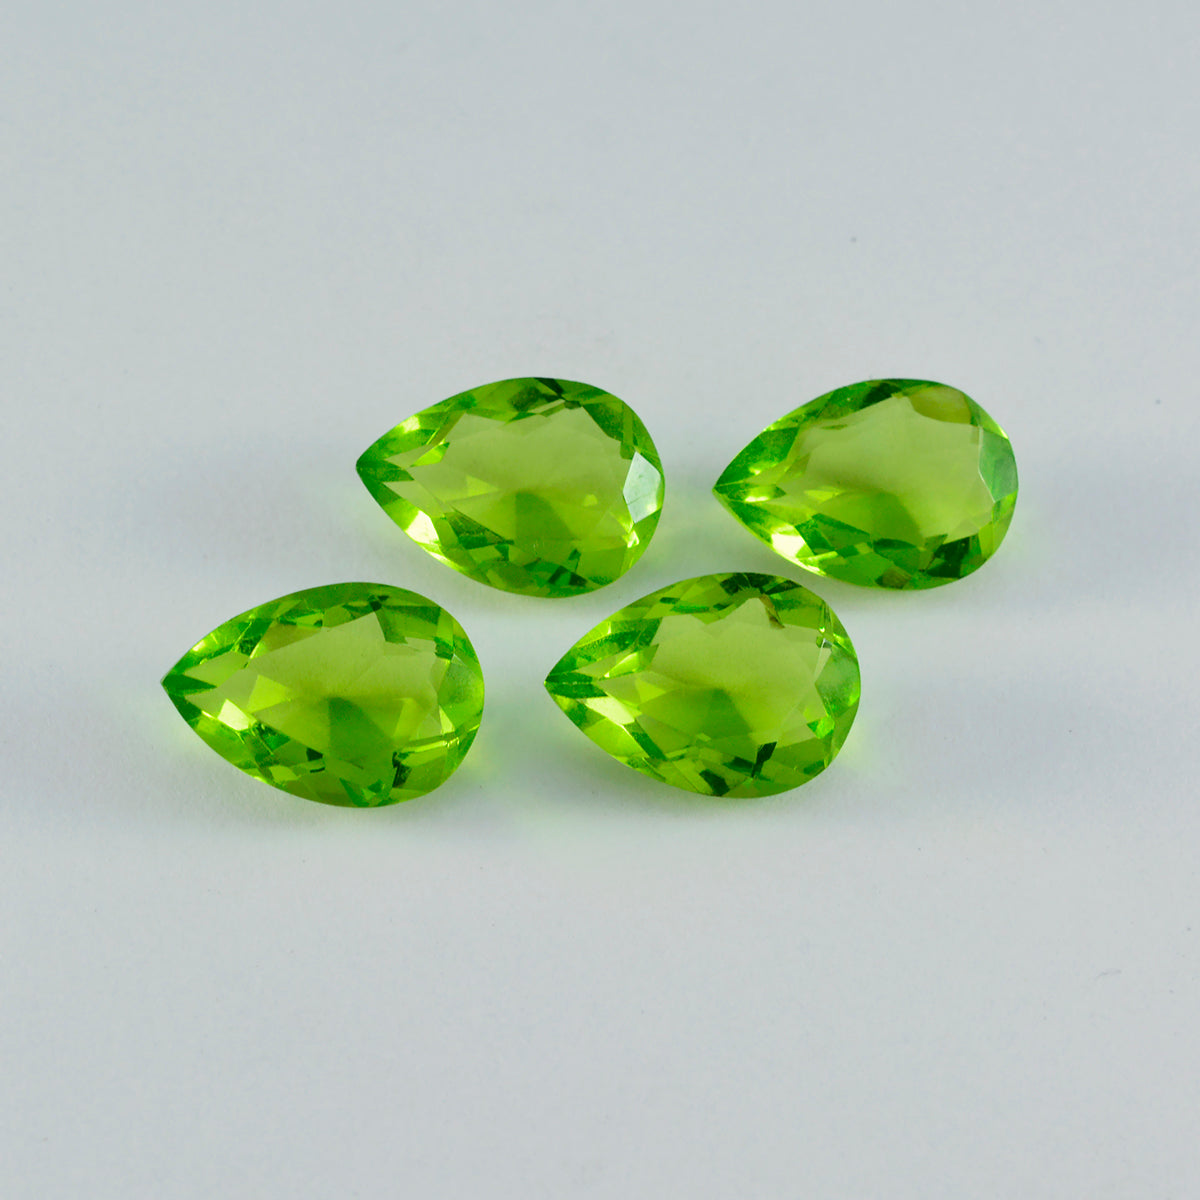 Riyogems 1PC Green Peridot CZ Faceted 8x12 mm Pear Shape superb Quality Stone